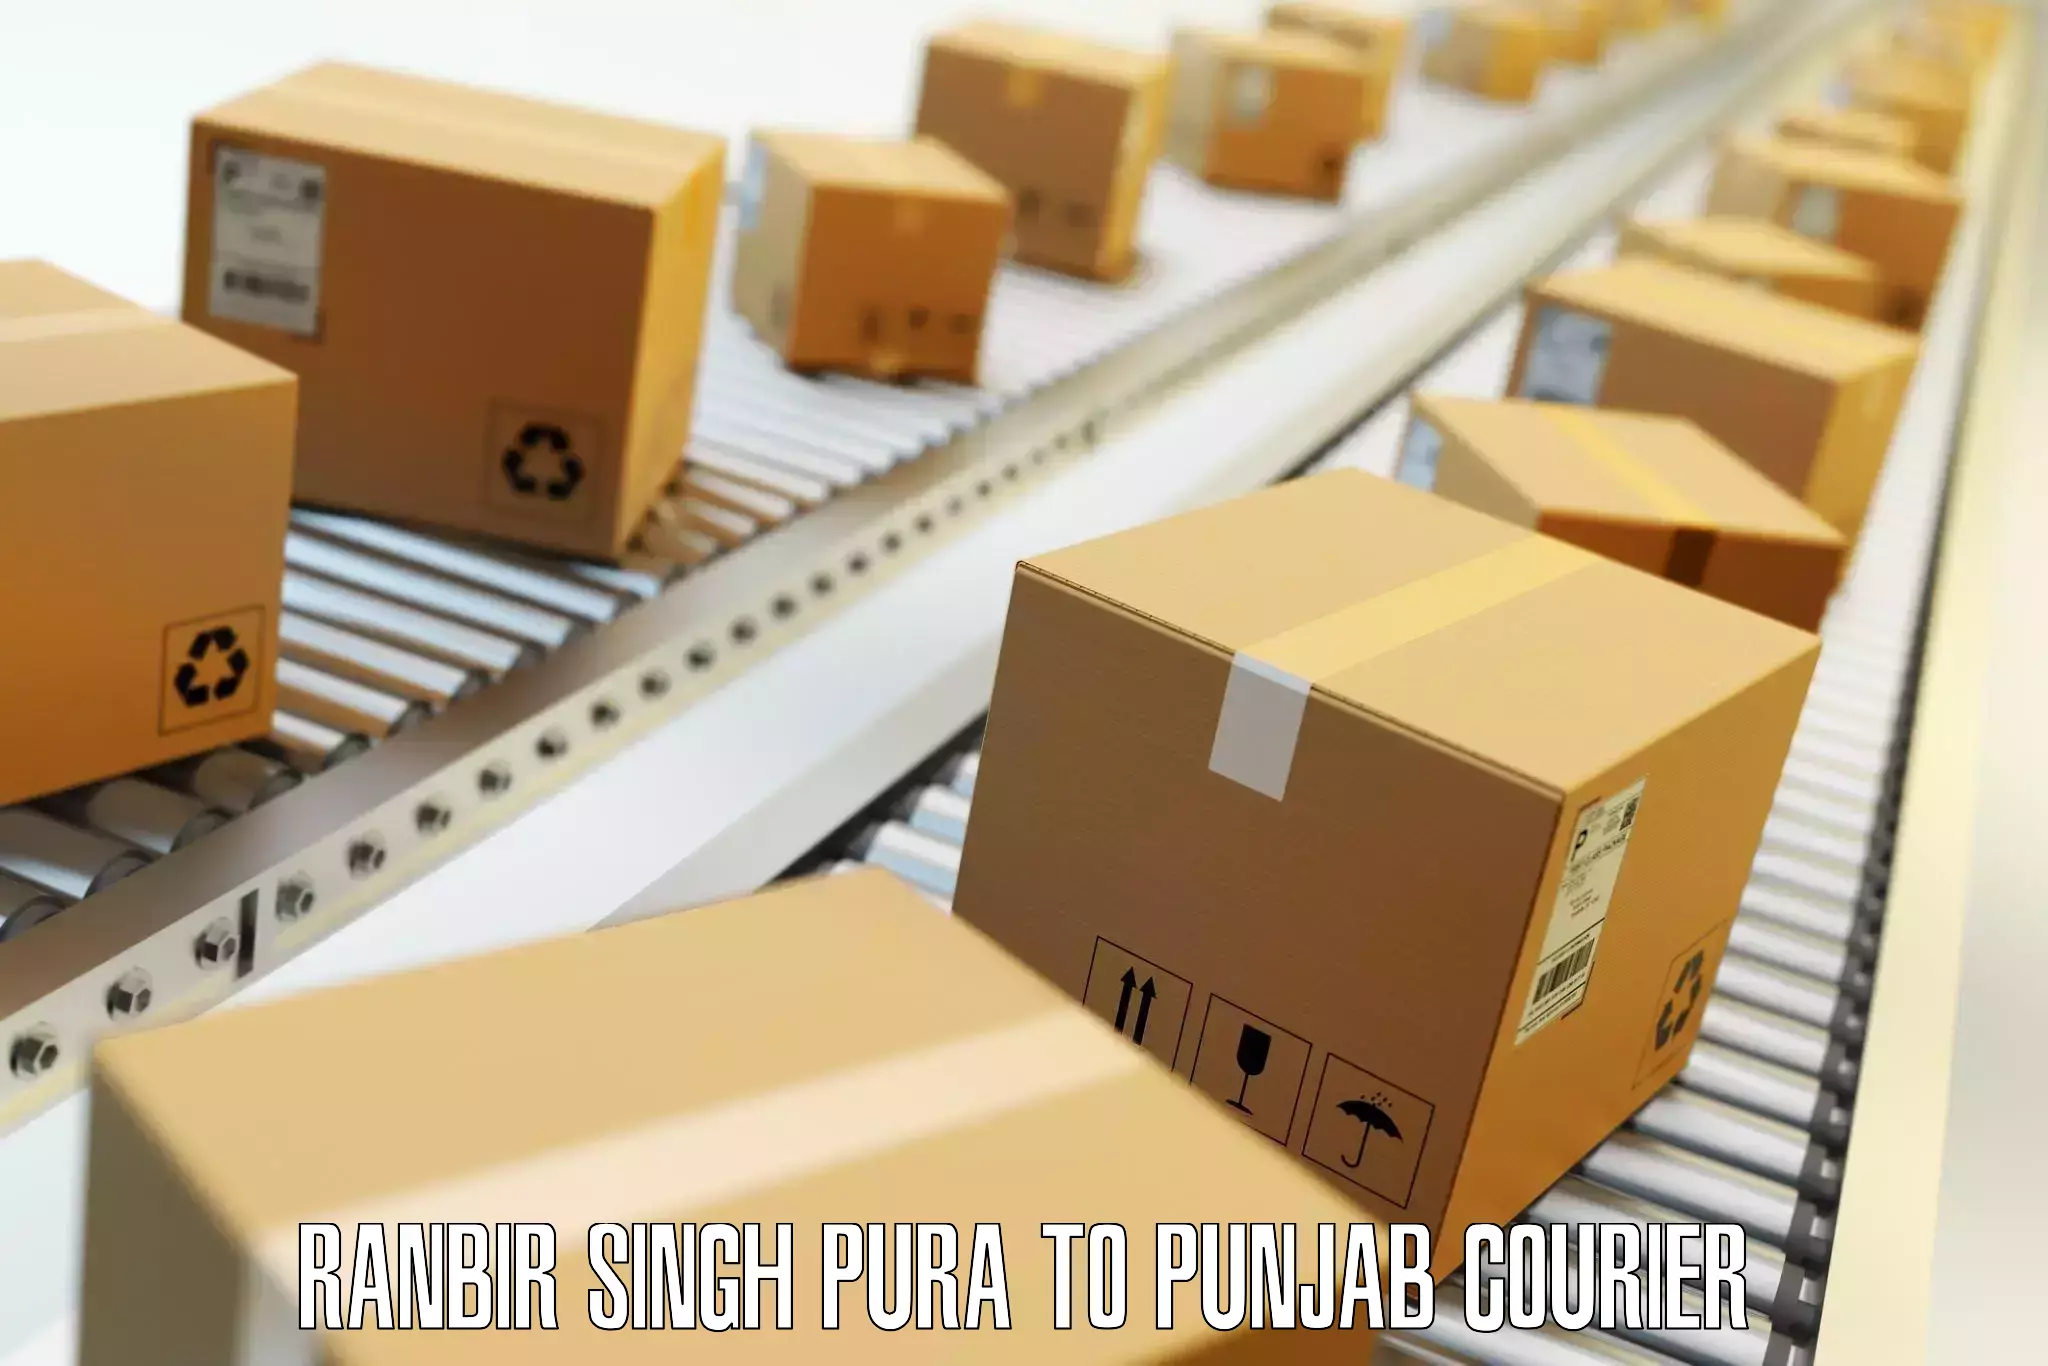 Door-to-door baggage service Ranbir Singh Pura to Punjab